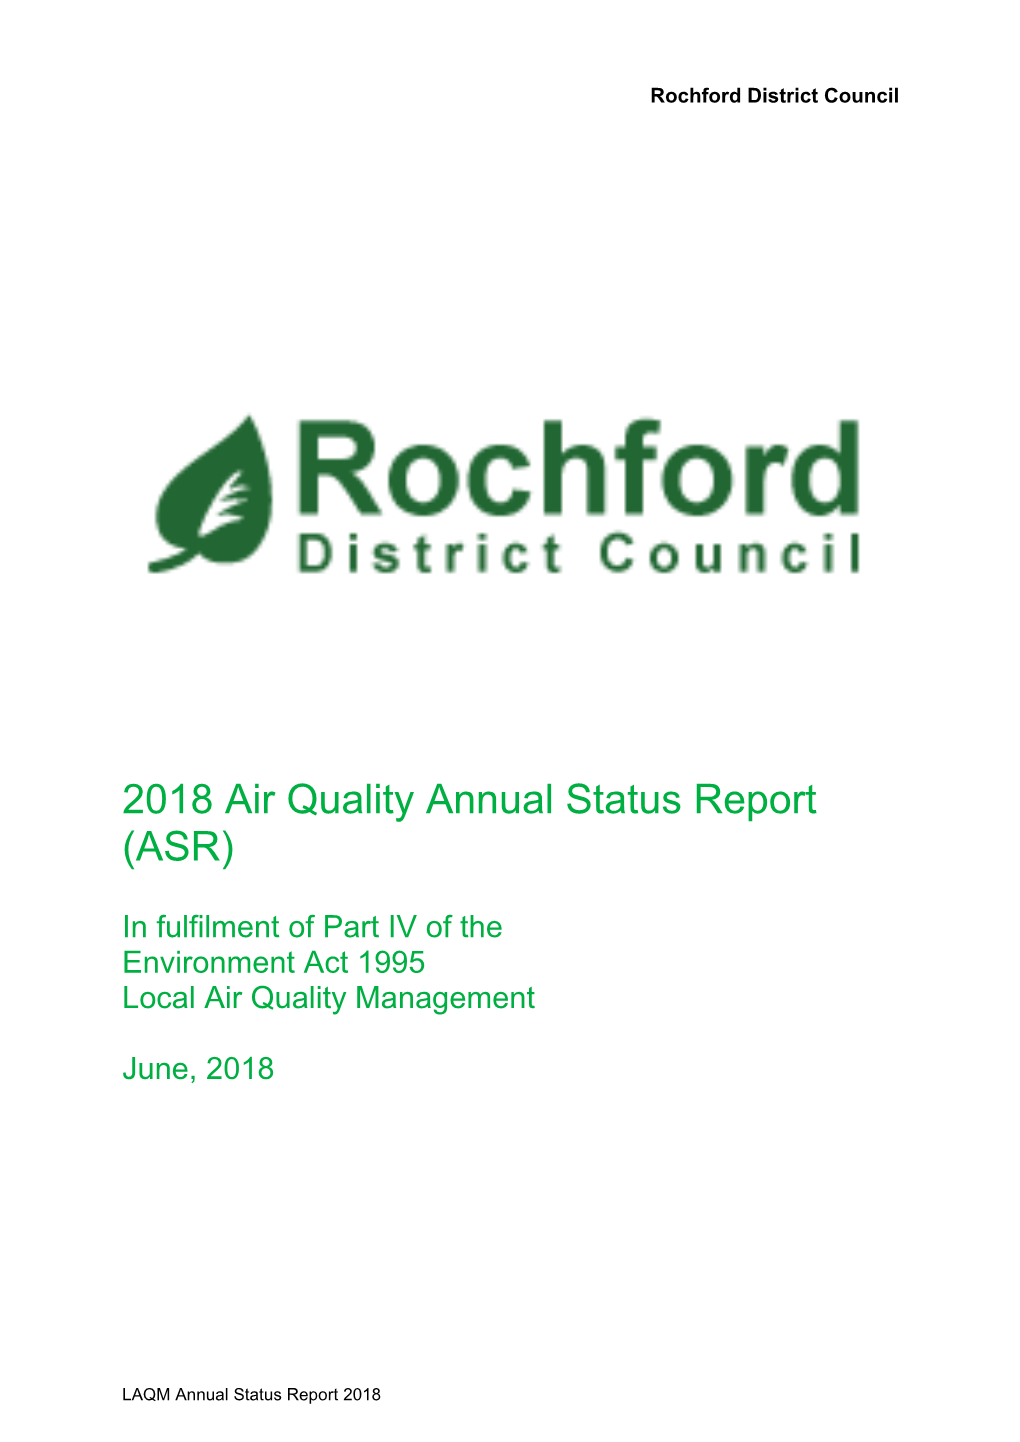 Rochford District Council 2017